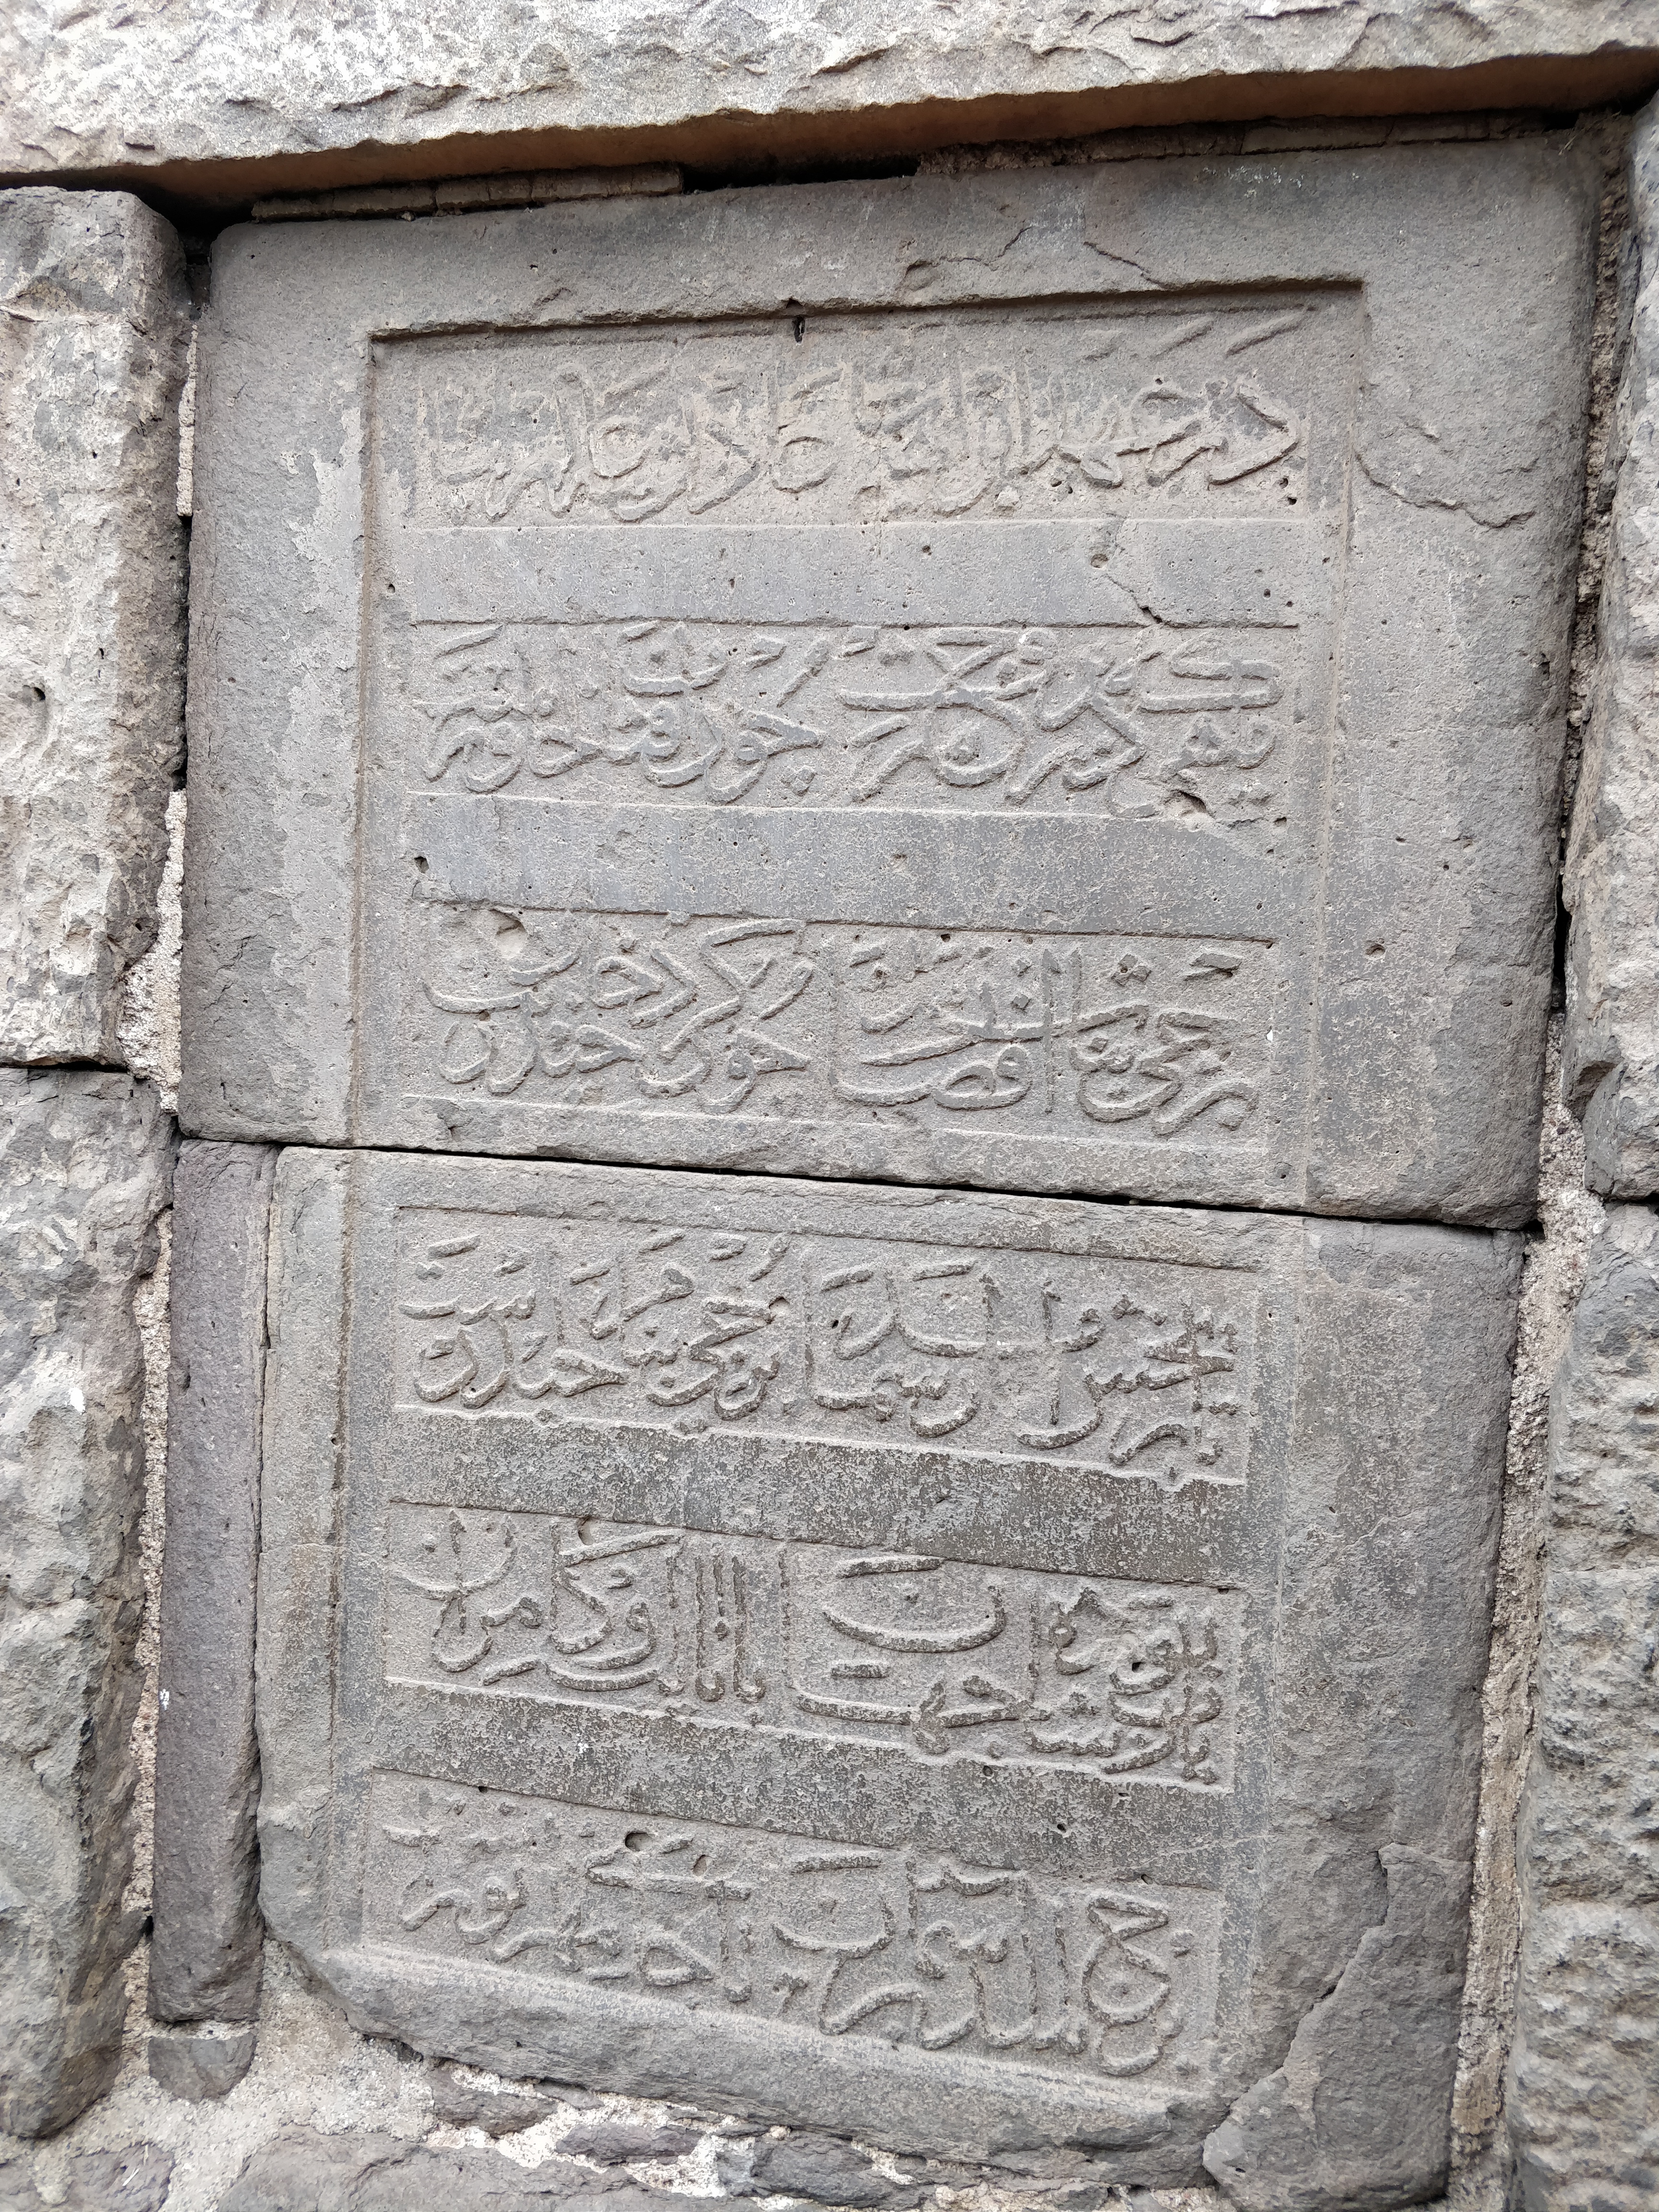 Upli Burz inscriptions